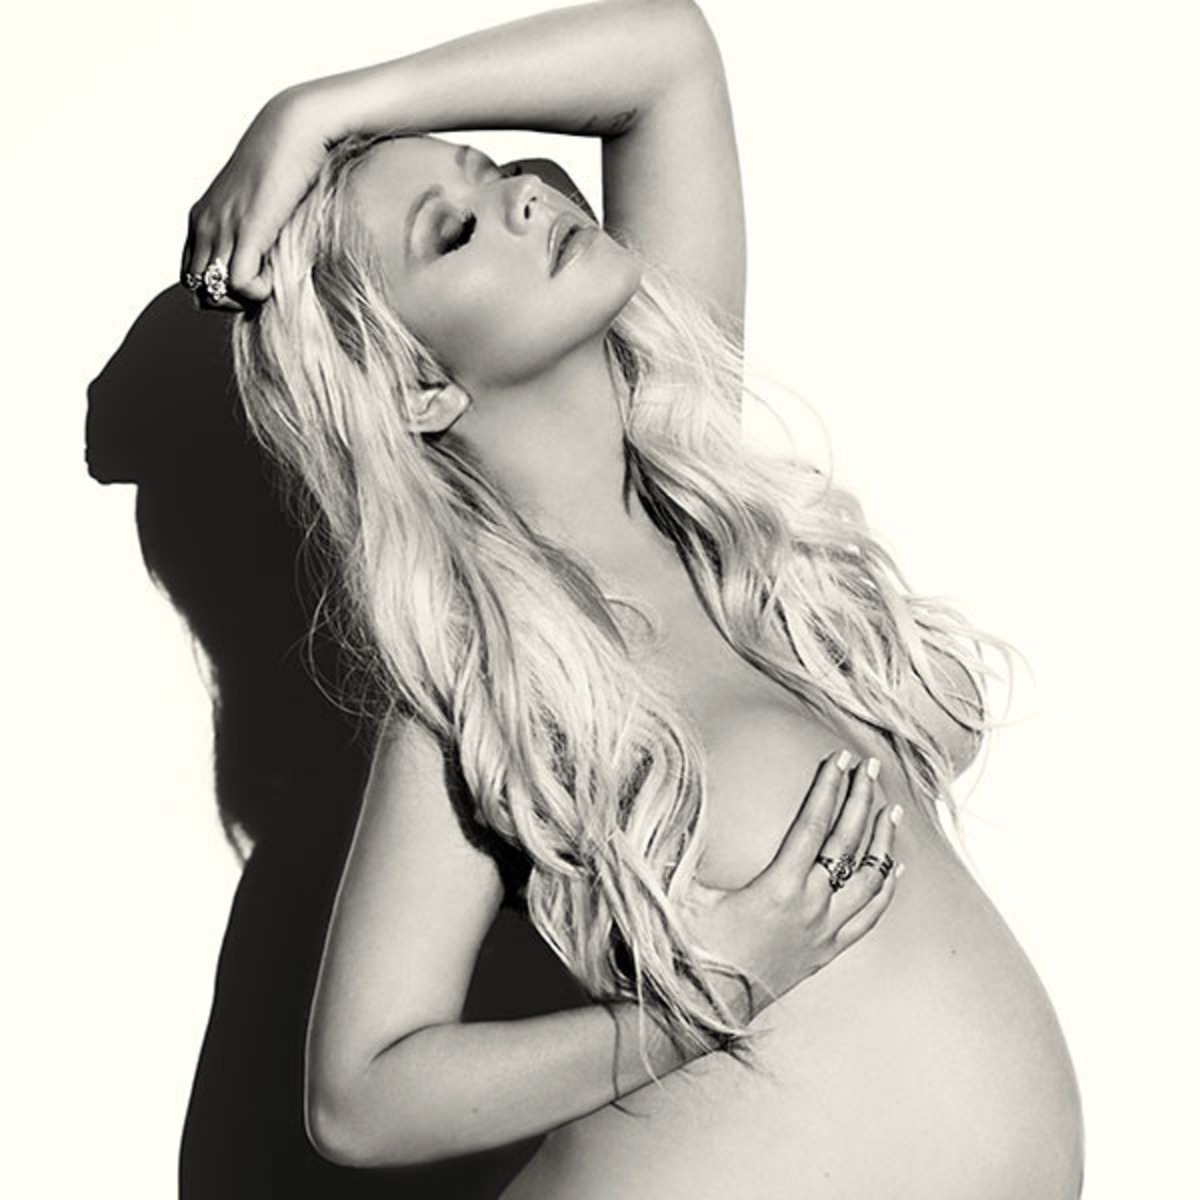 Christina Aguilera Naked Photos women pregnant